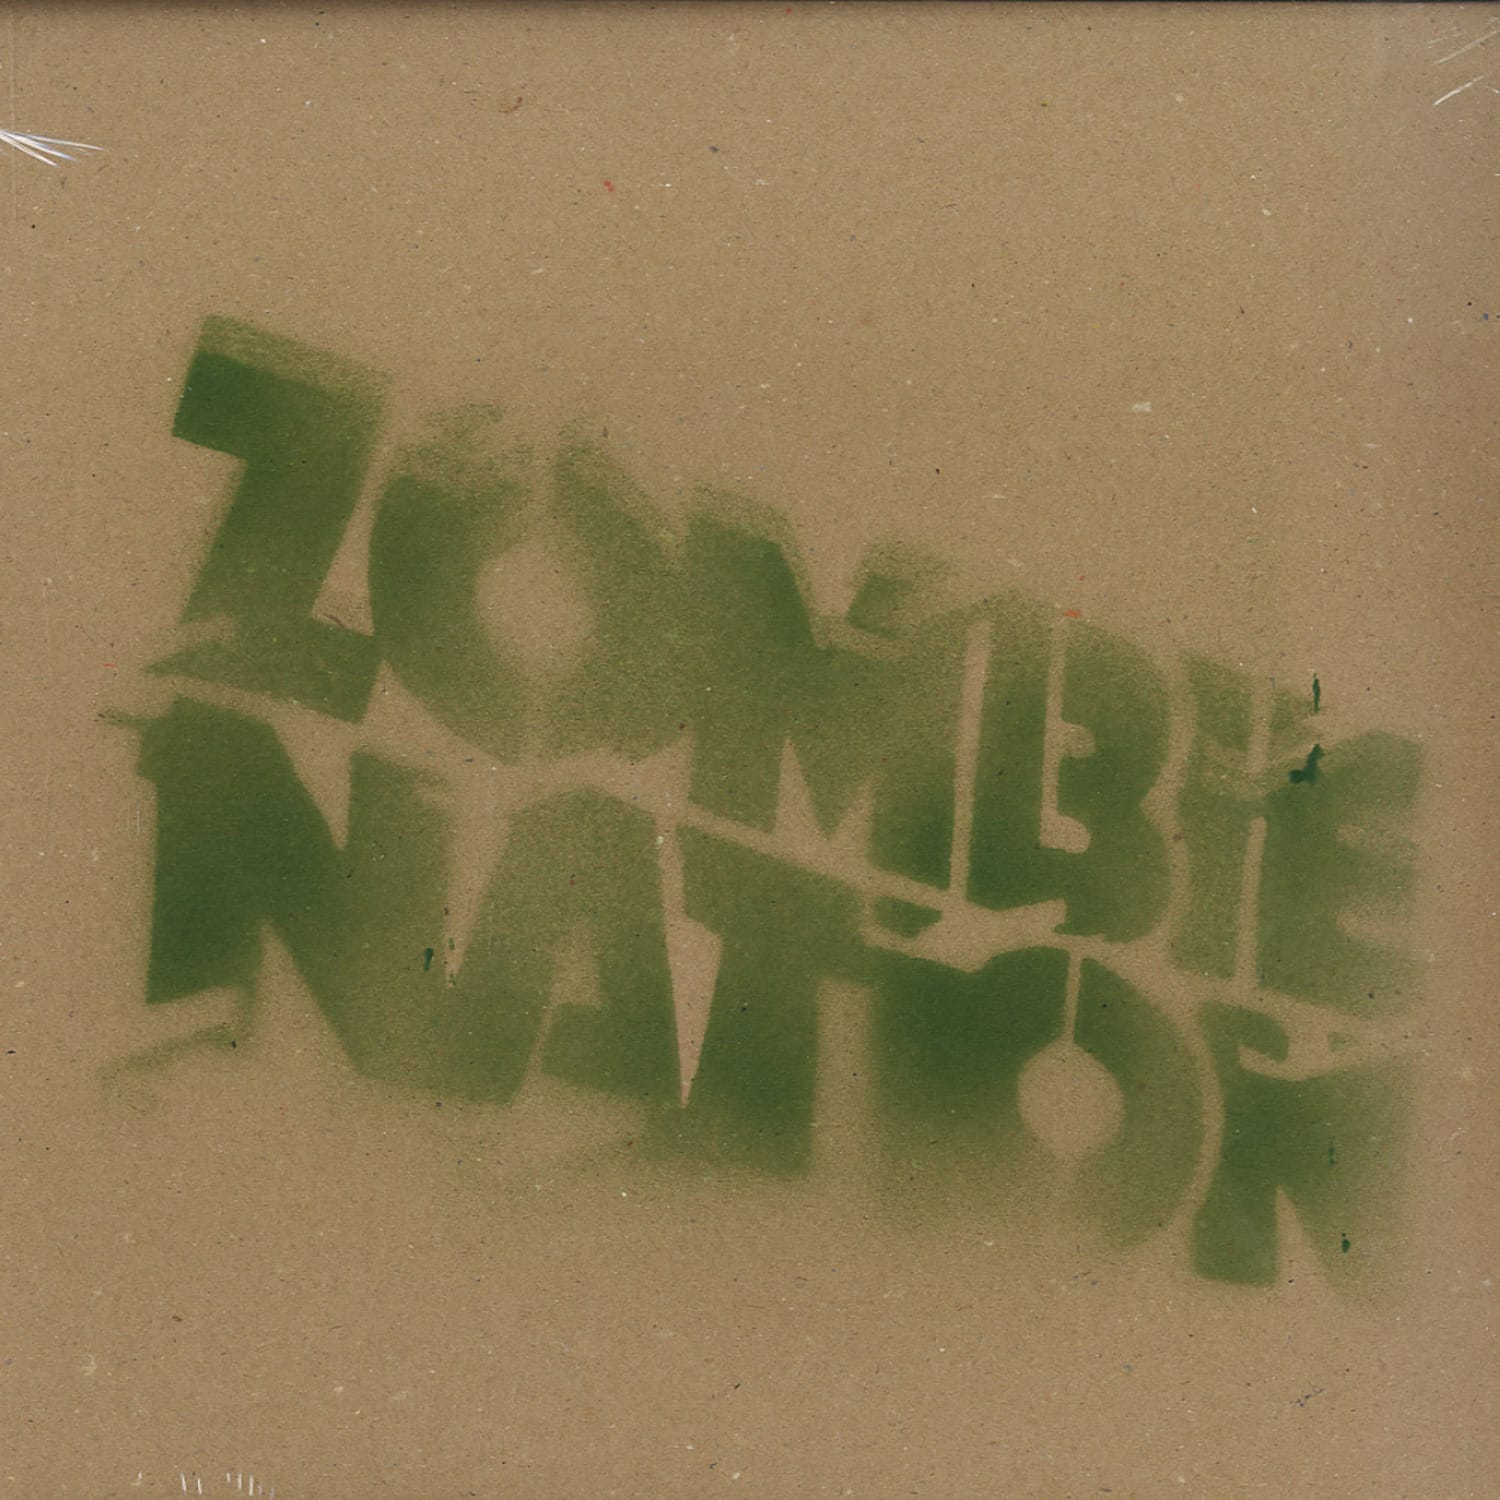 Zombie Nation - OVERSHOOT & SQUEEK RMXS 